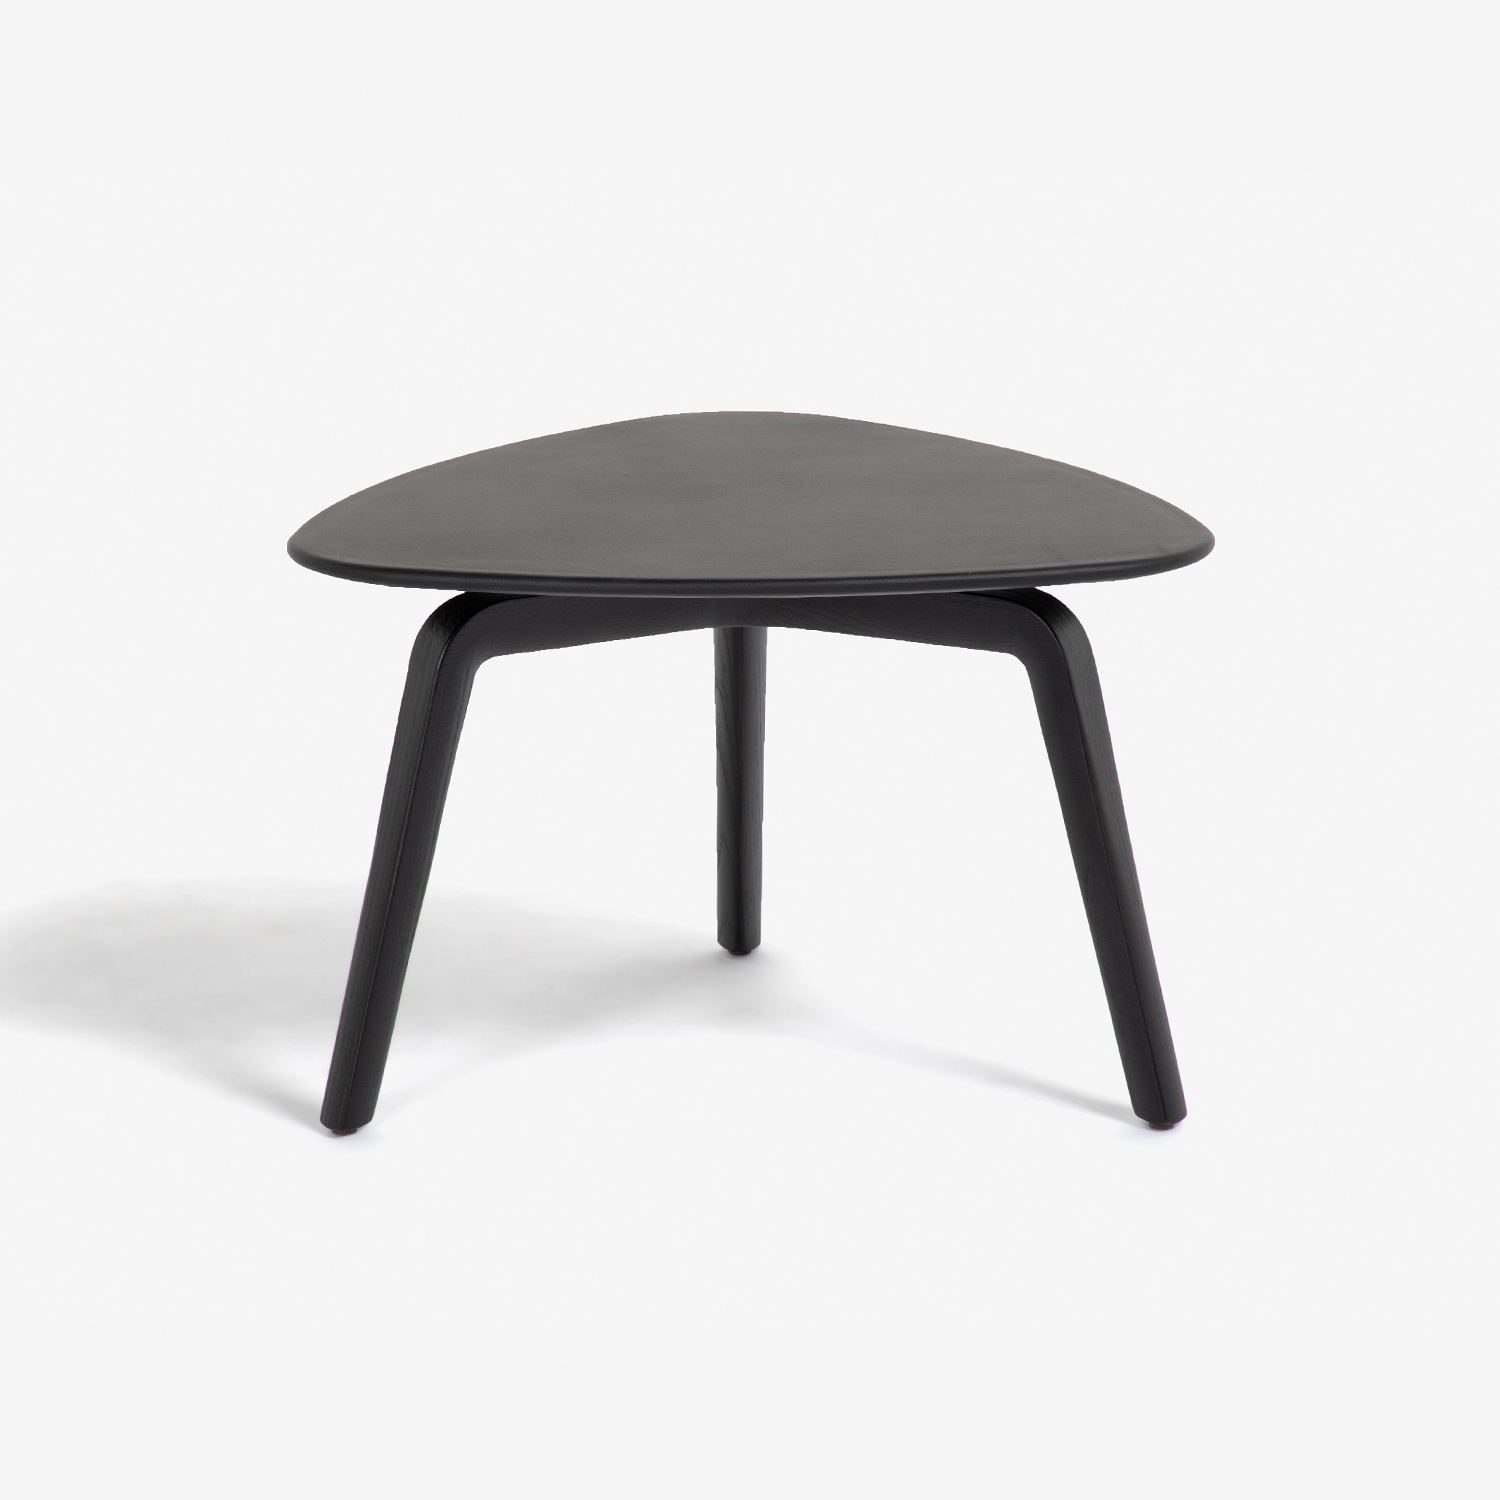 PoltronaFrau（ポルトローナ・フラウ）サイドテーブル 「フィオリーレ ロータイプ」アッシュ材ダークブラウン色 天板革ブラック色